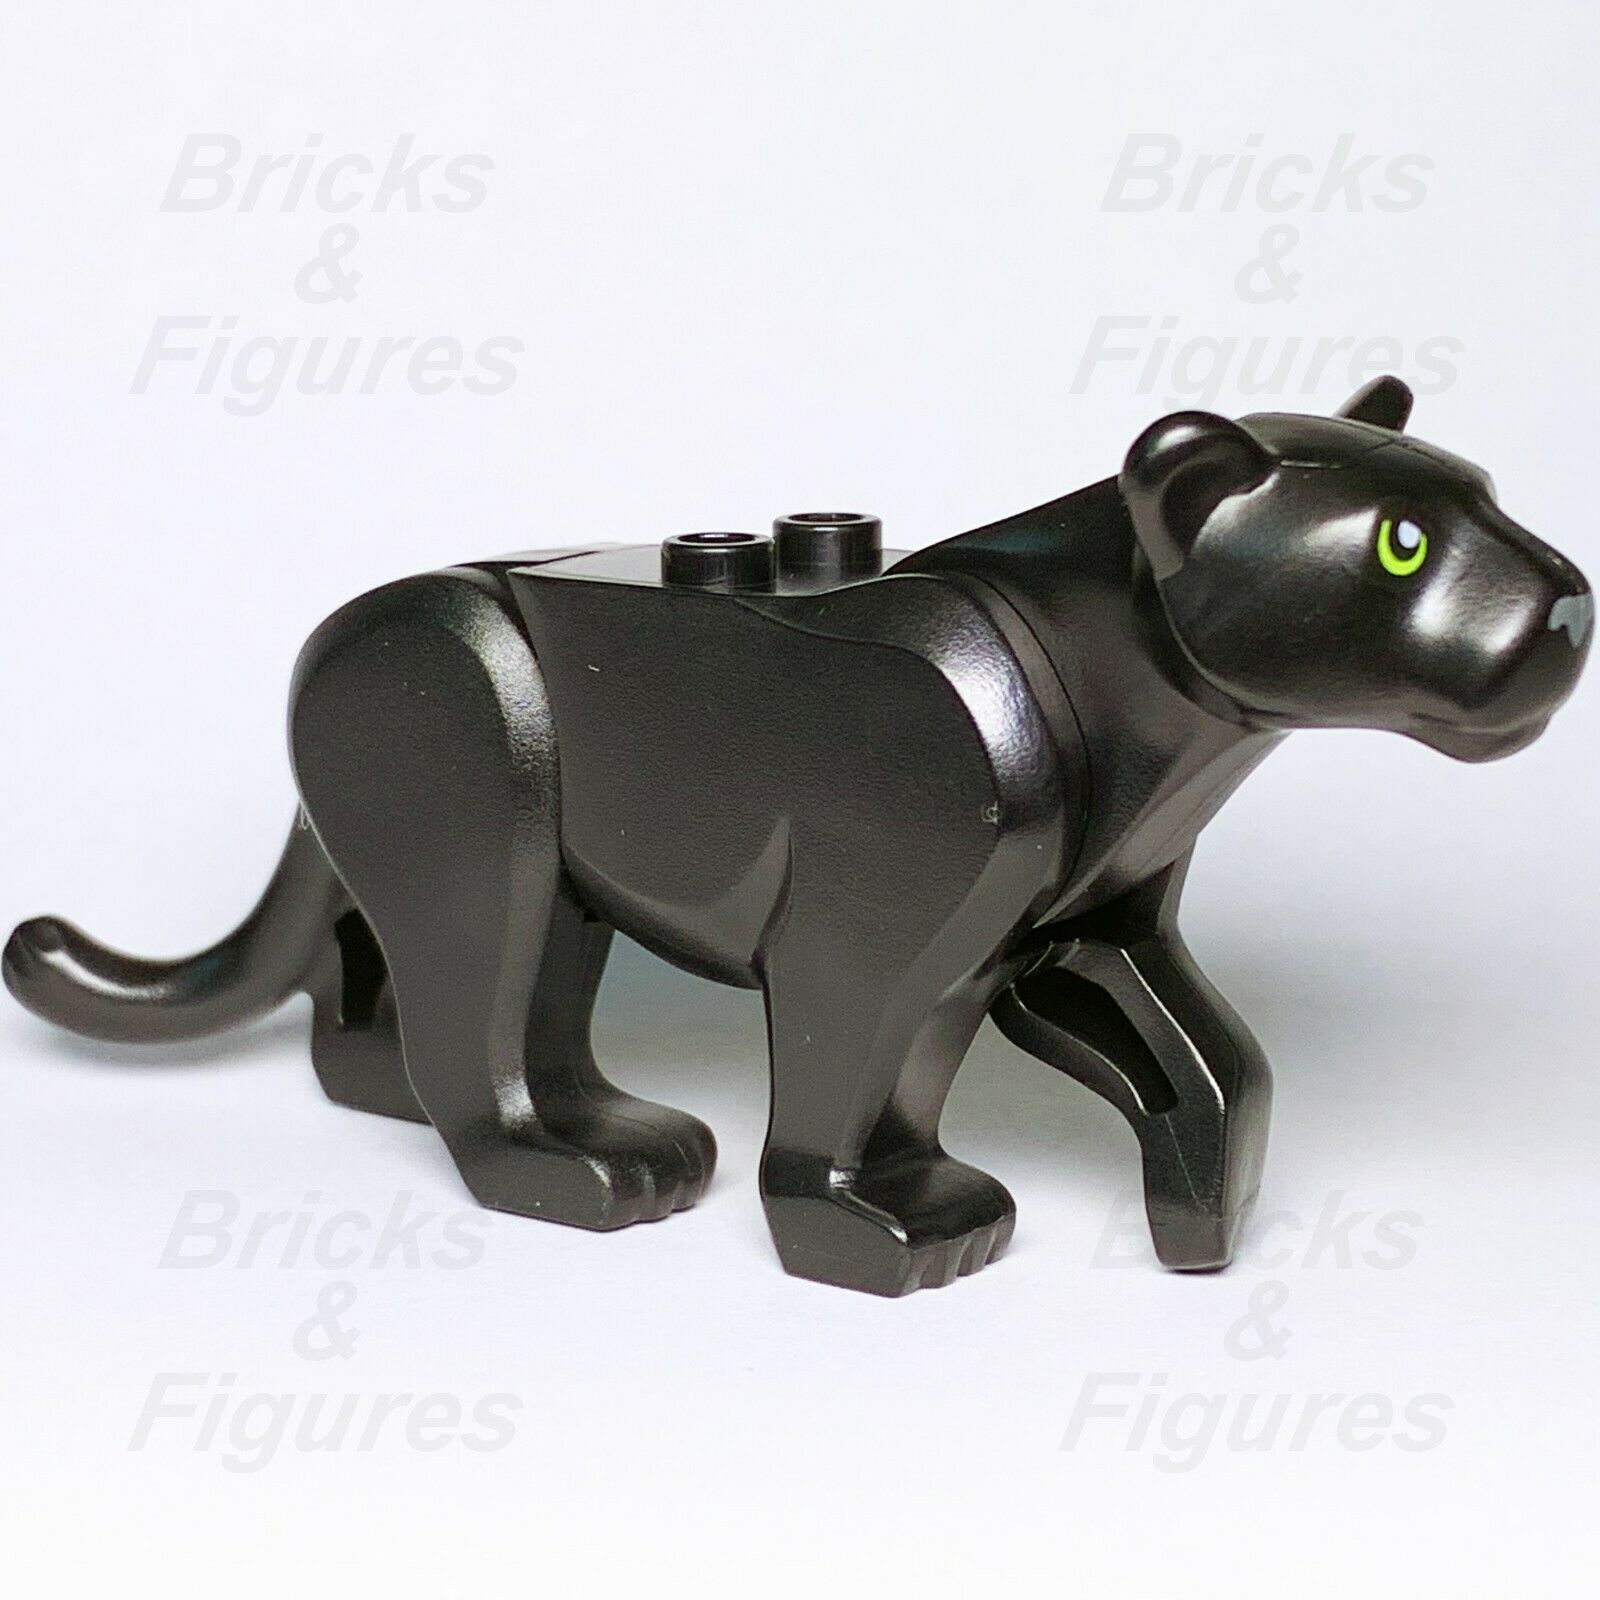 New LEGO Town City Black Panther Jungle Large Cat Animal Minifigure Part 60159 - Bricks & Figures